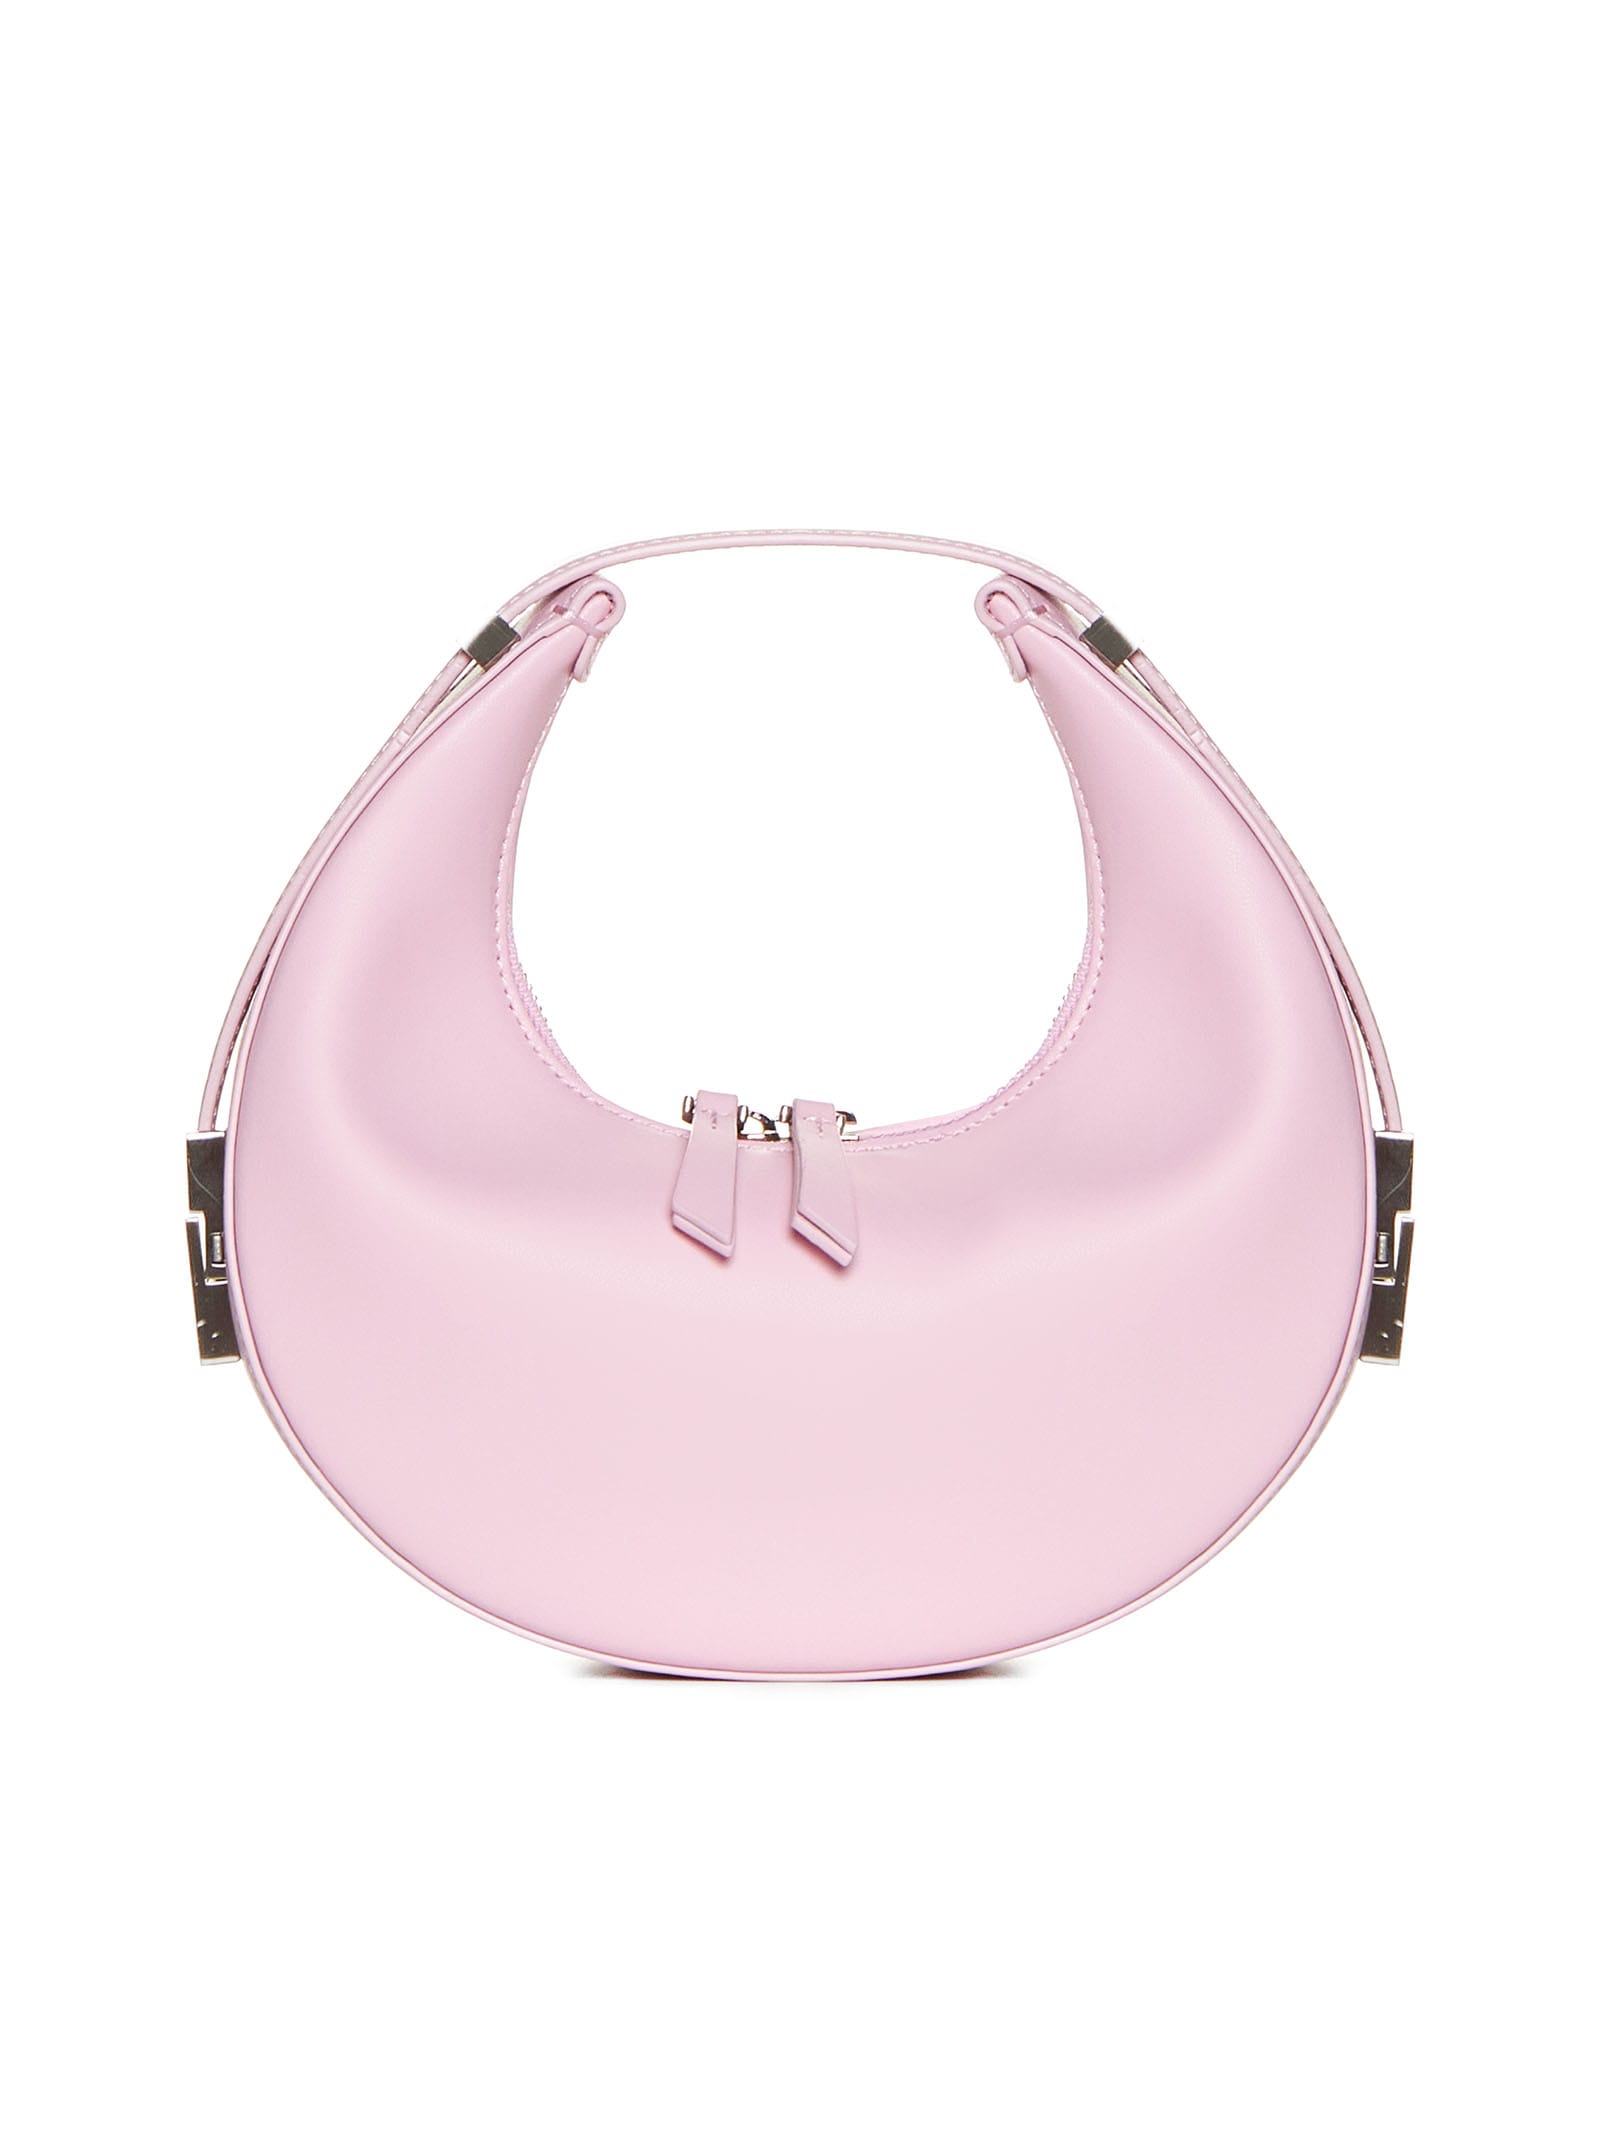 Osoi Shoulder Bag In Baby Pink